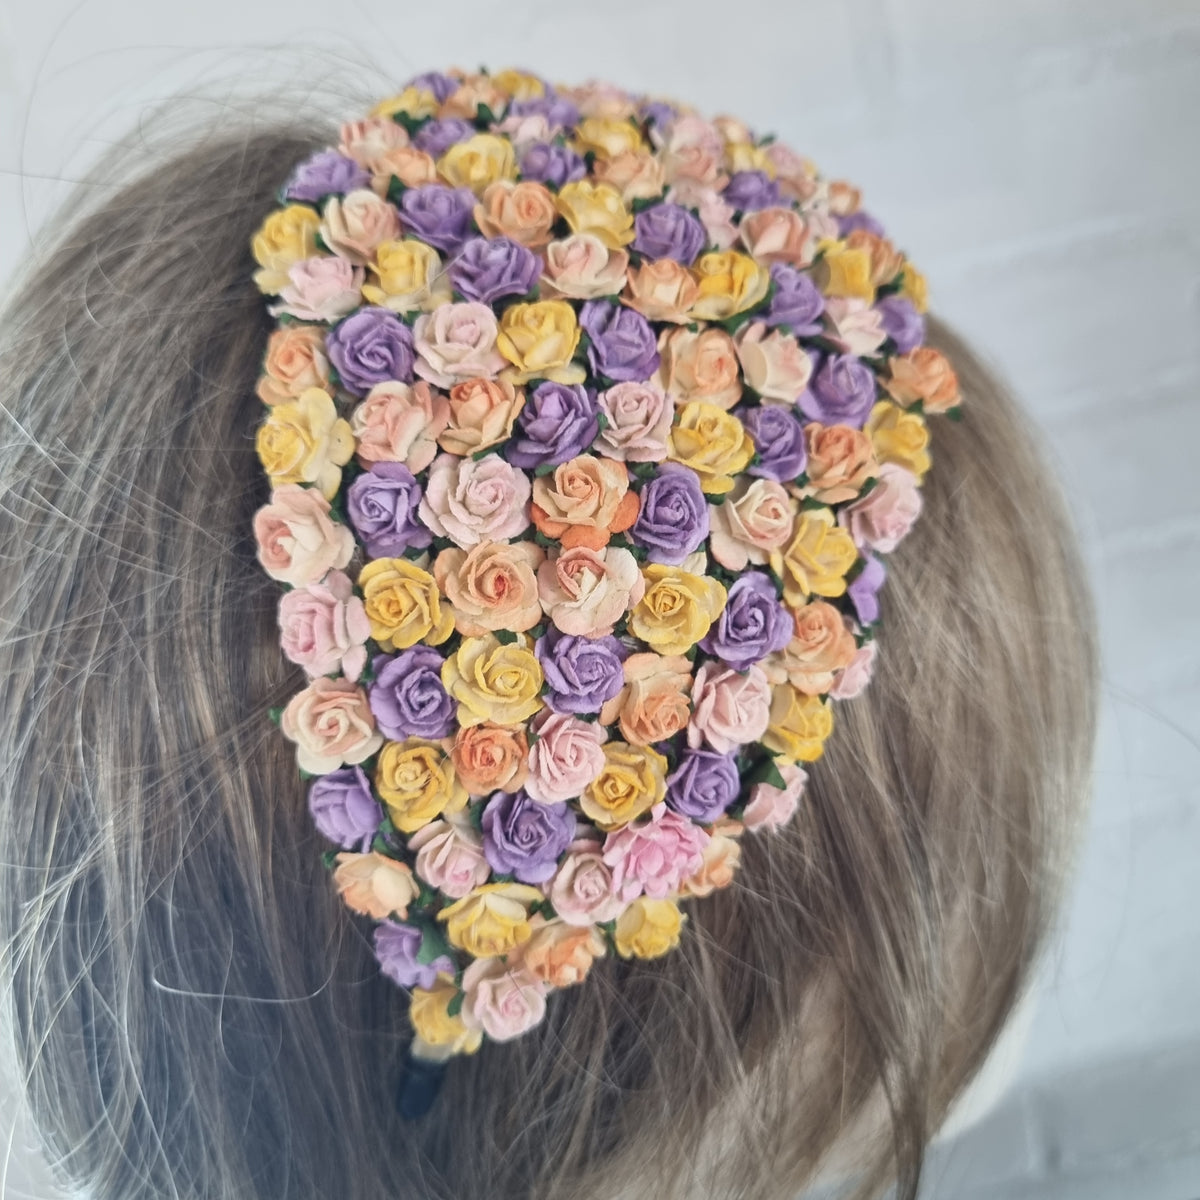 Fascinator med små pastelfarvede roser - Hårpynt med blomster og perler til bryllup, konfirmation og fest